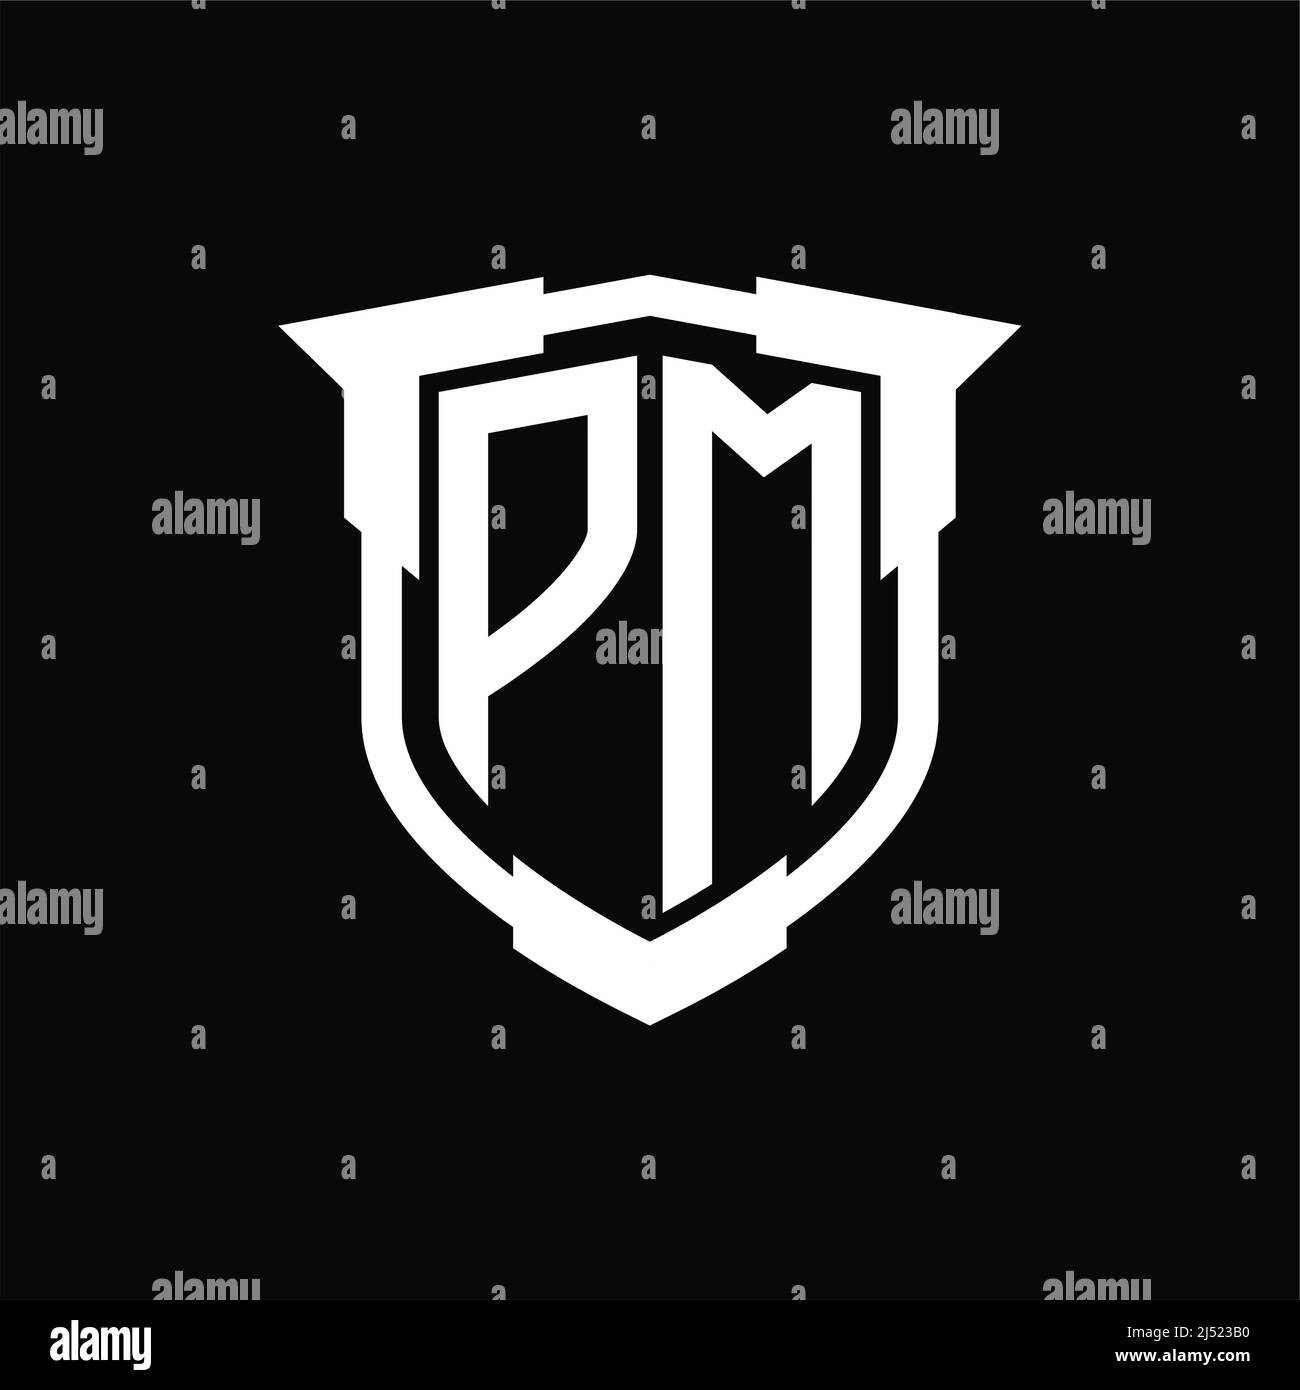 PM Logo monogram letter with shield shape design template Stock Vector